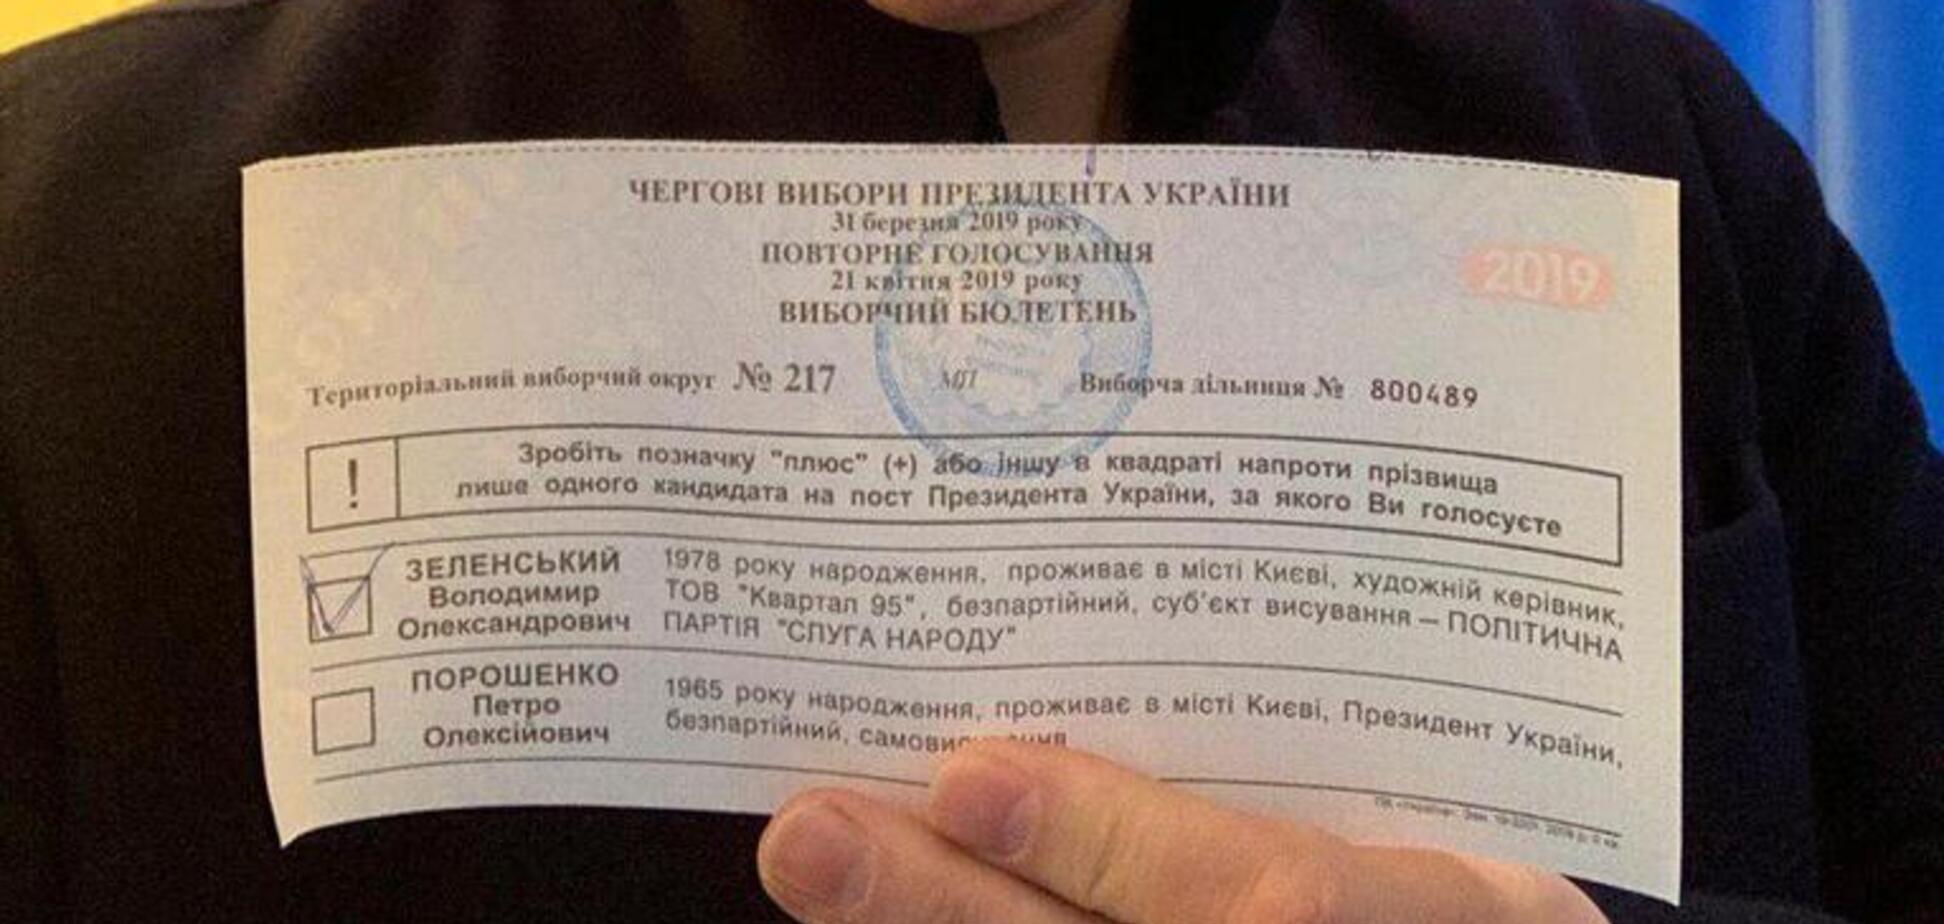 Фукс нарушил закон на выборах Украины: появилось фото 